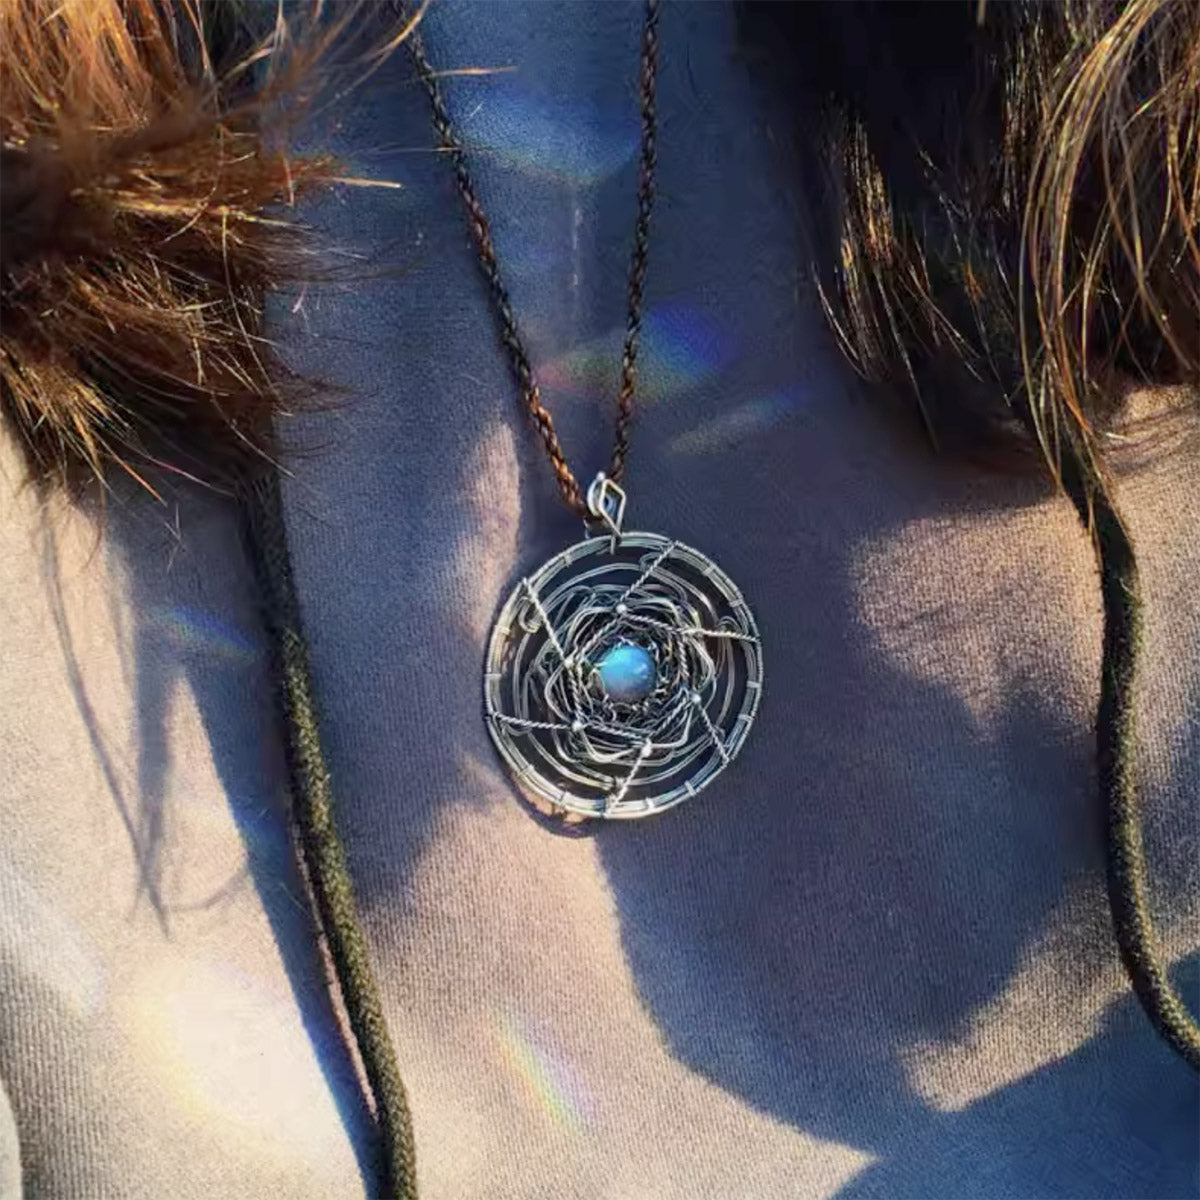 Mandala Quartz Crystal Ball Healing Pendant Handmade Silver Jewelry Tibetan Quartz Crystal Energy for happiness pleasure